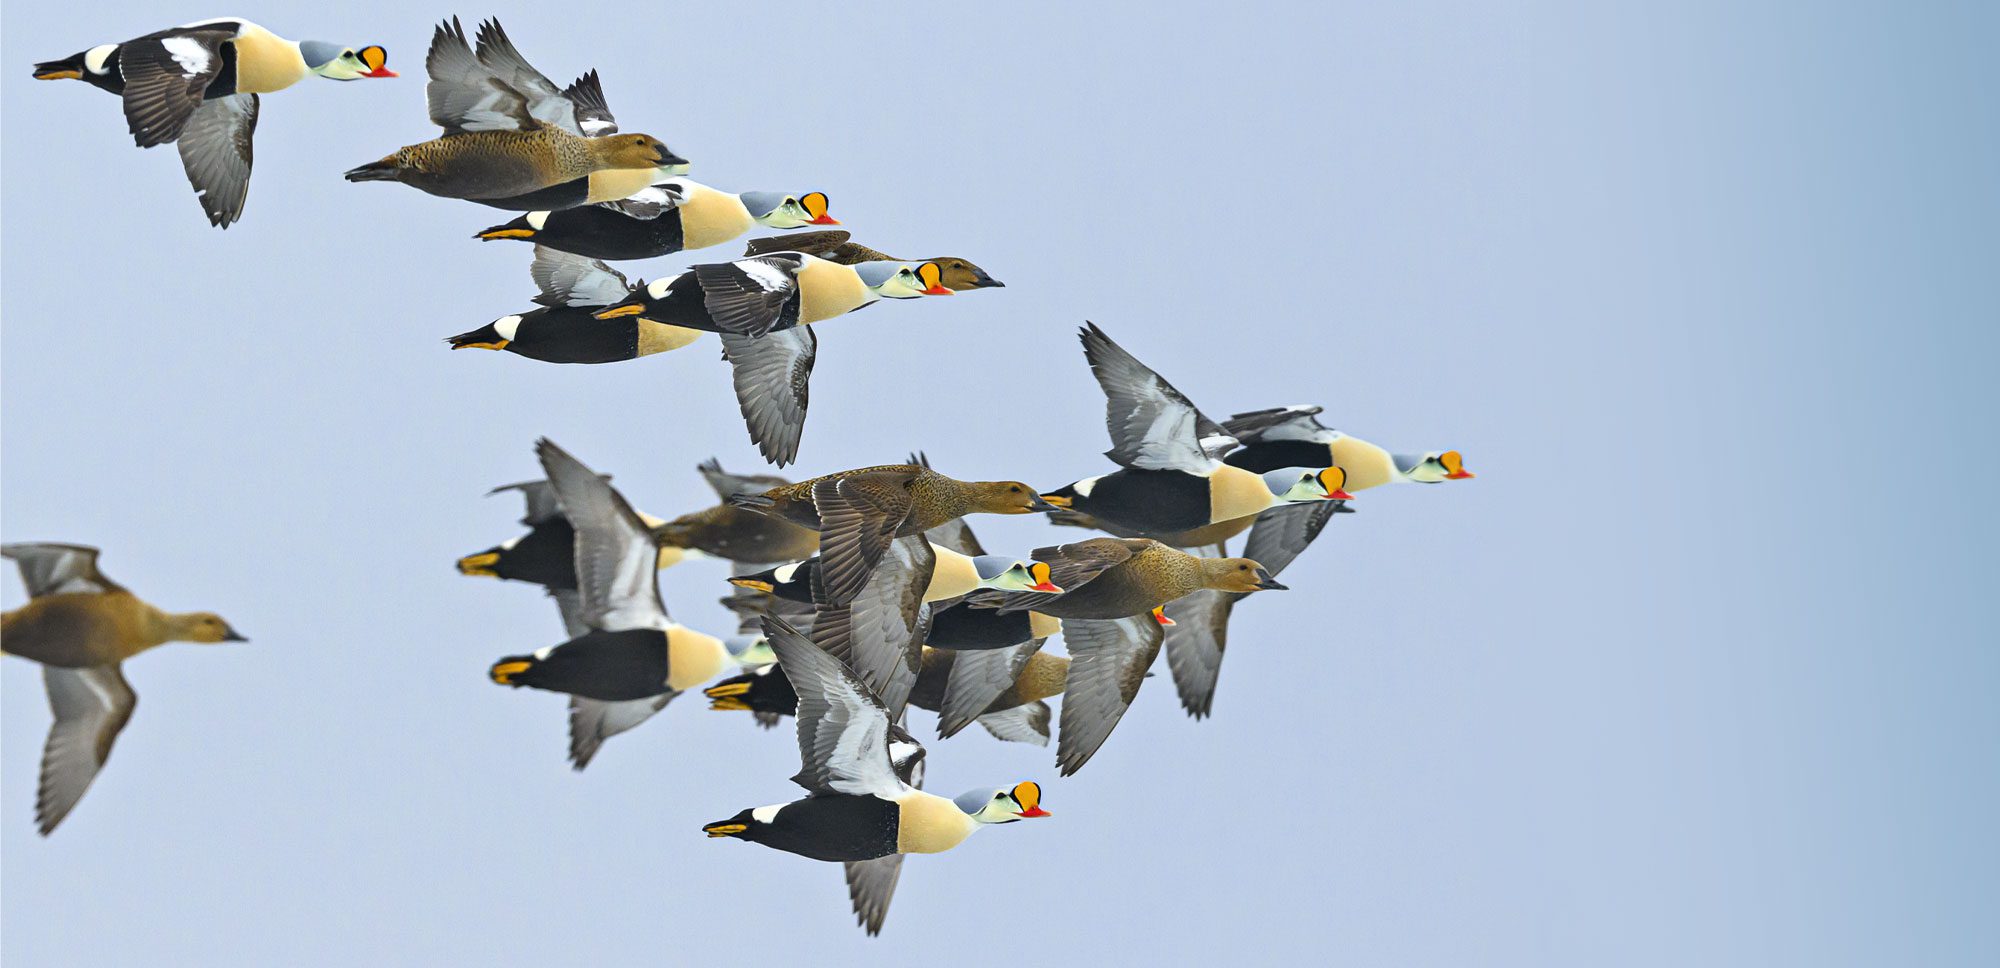 Multicolored ducks in flight